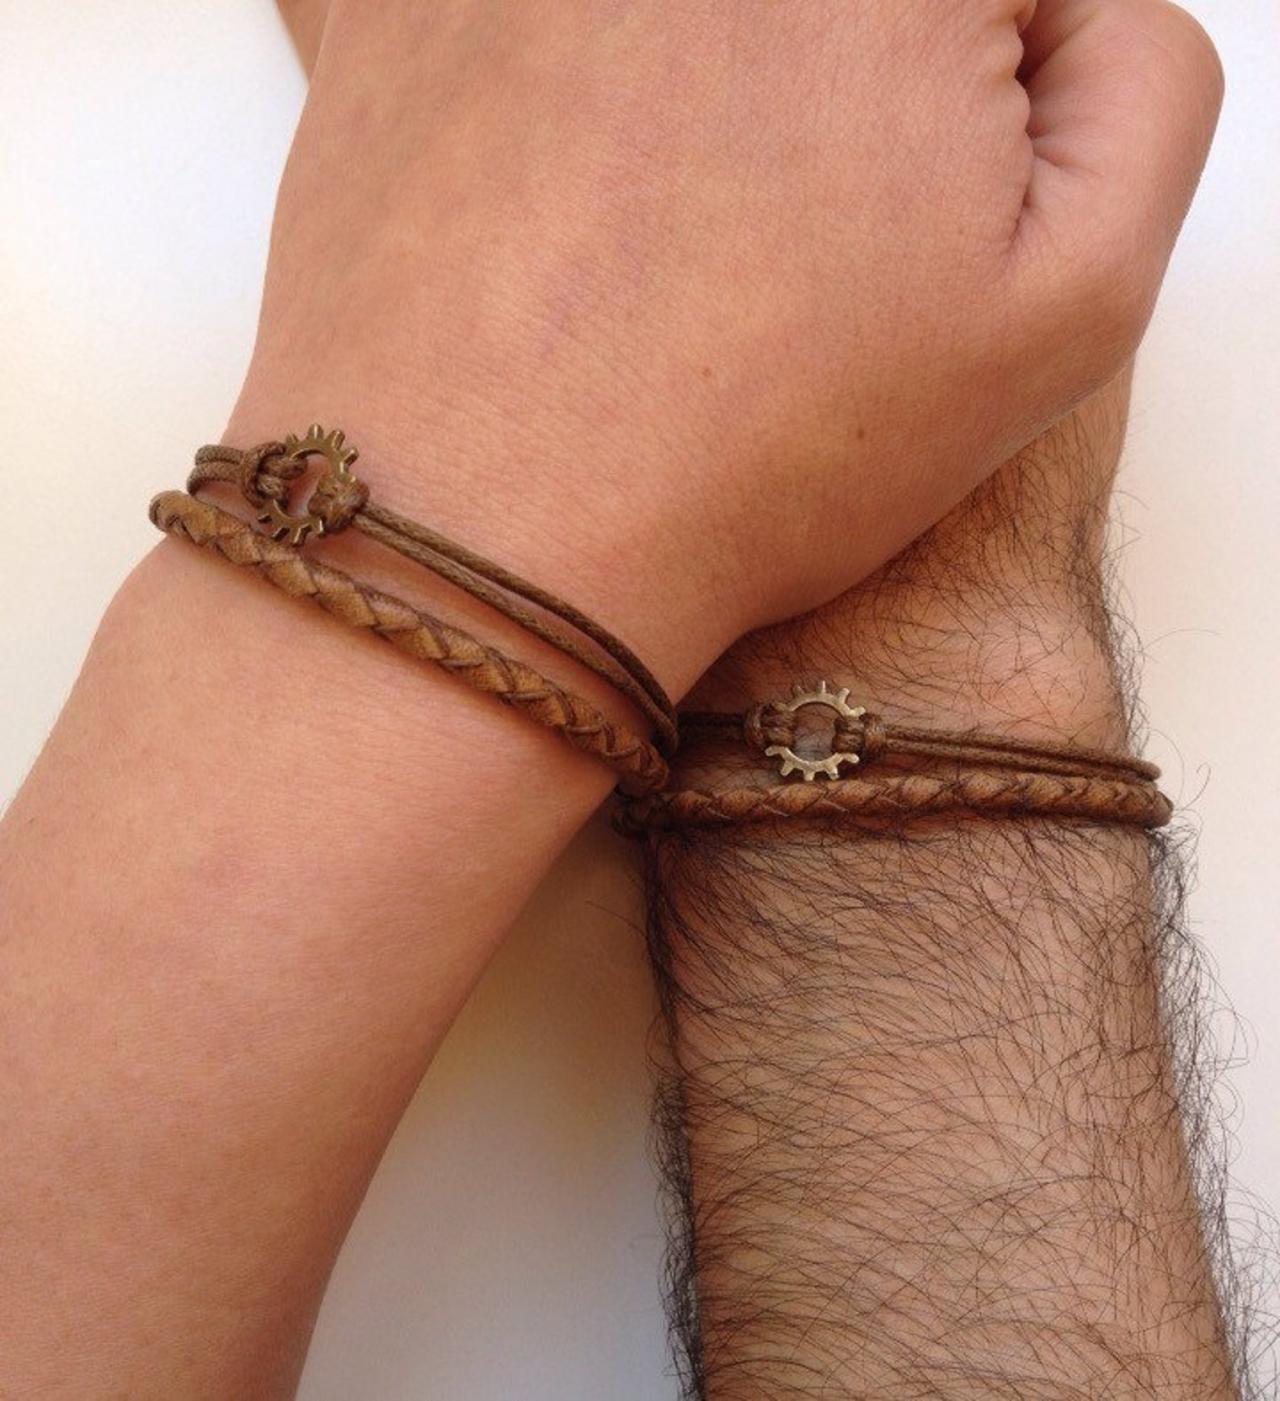 Couples Bracelets 184- Friendship Love Cuff Steampunk Bronze Gear Charm Bracelet Leather Braid Gift Adjustable Current Trendy Innovative